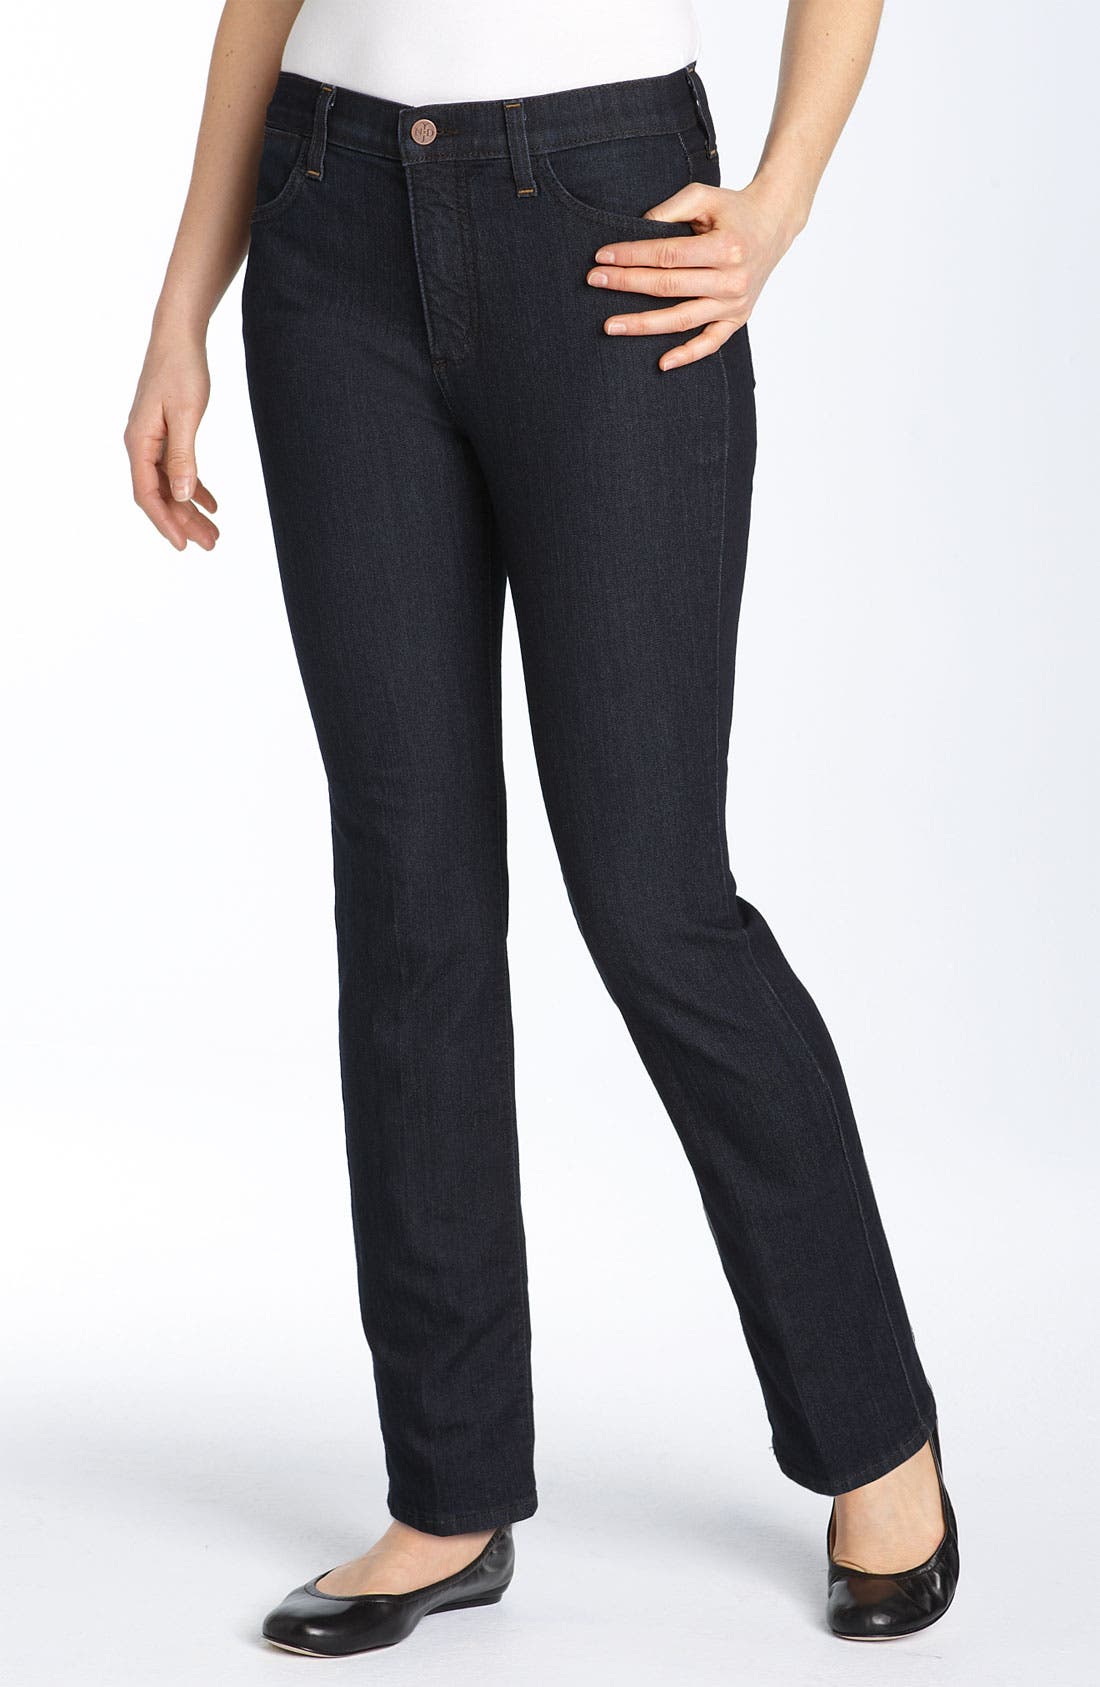 simply emma plus size jeans